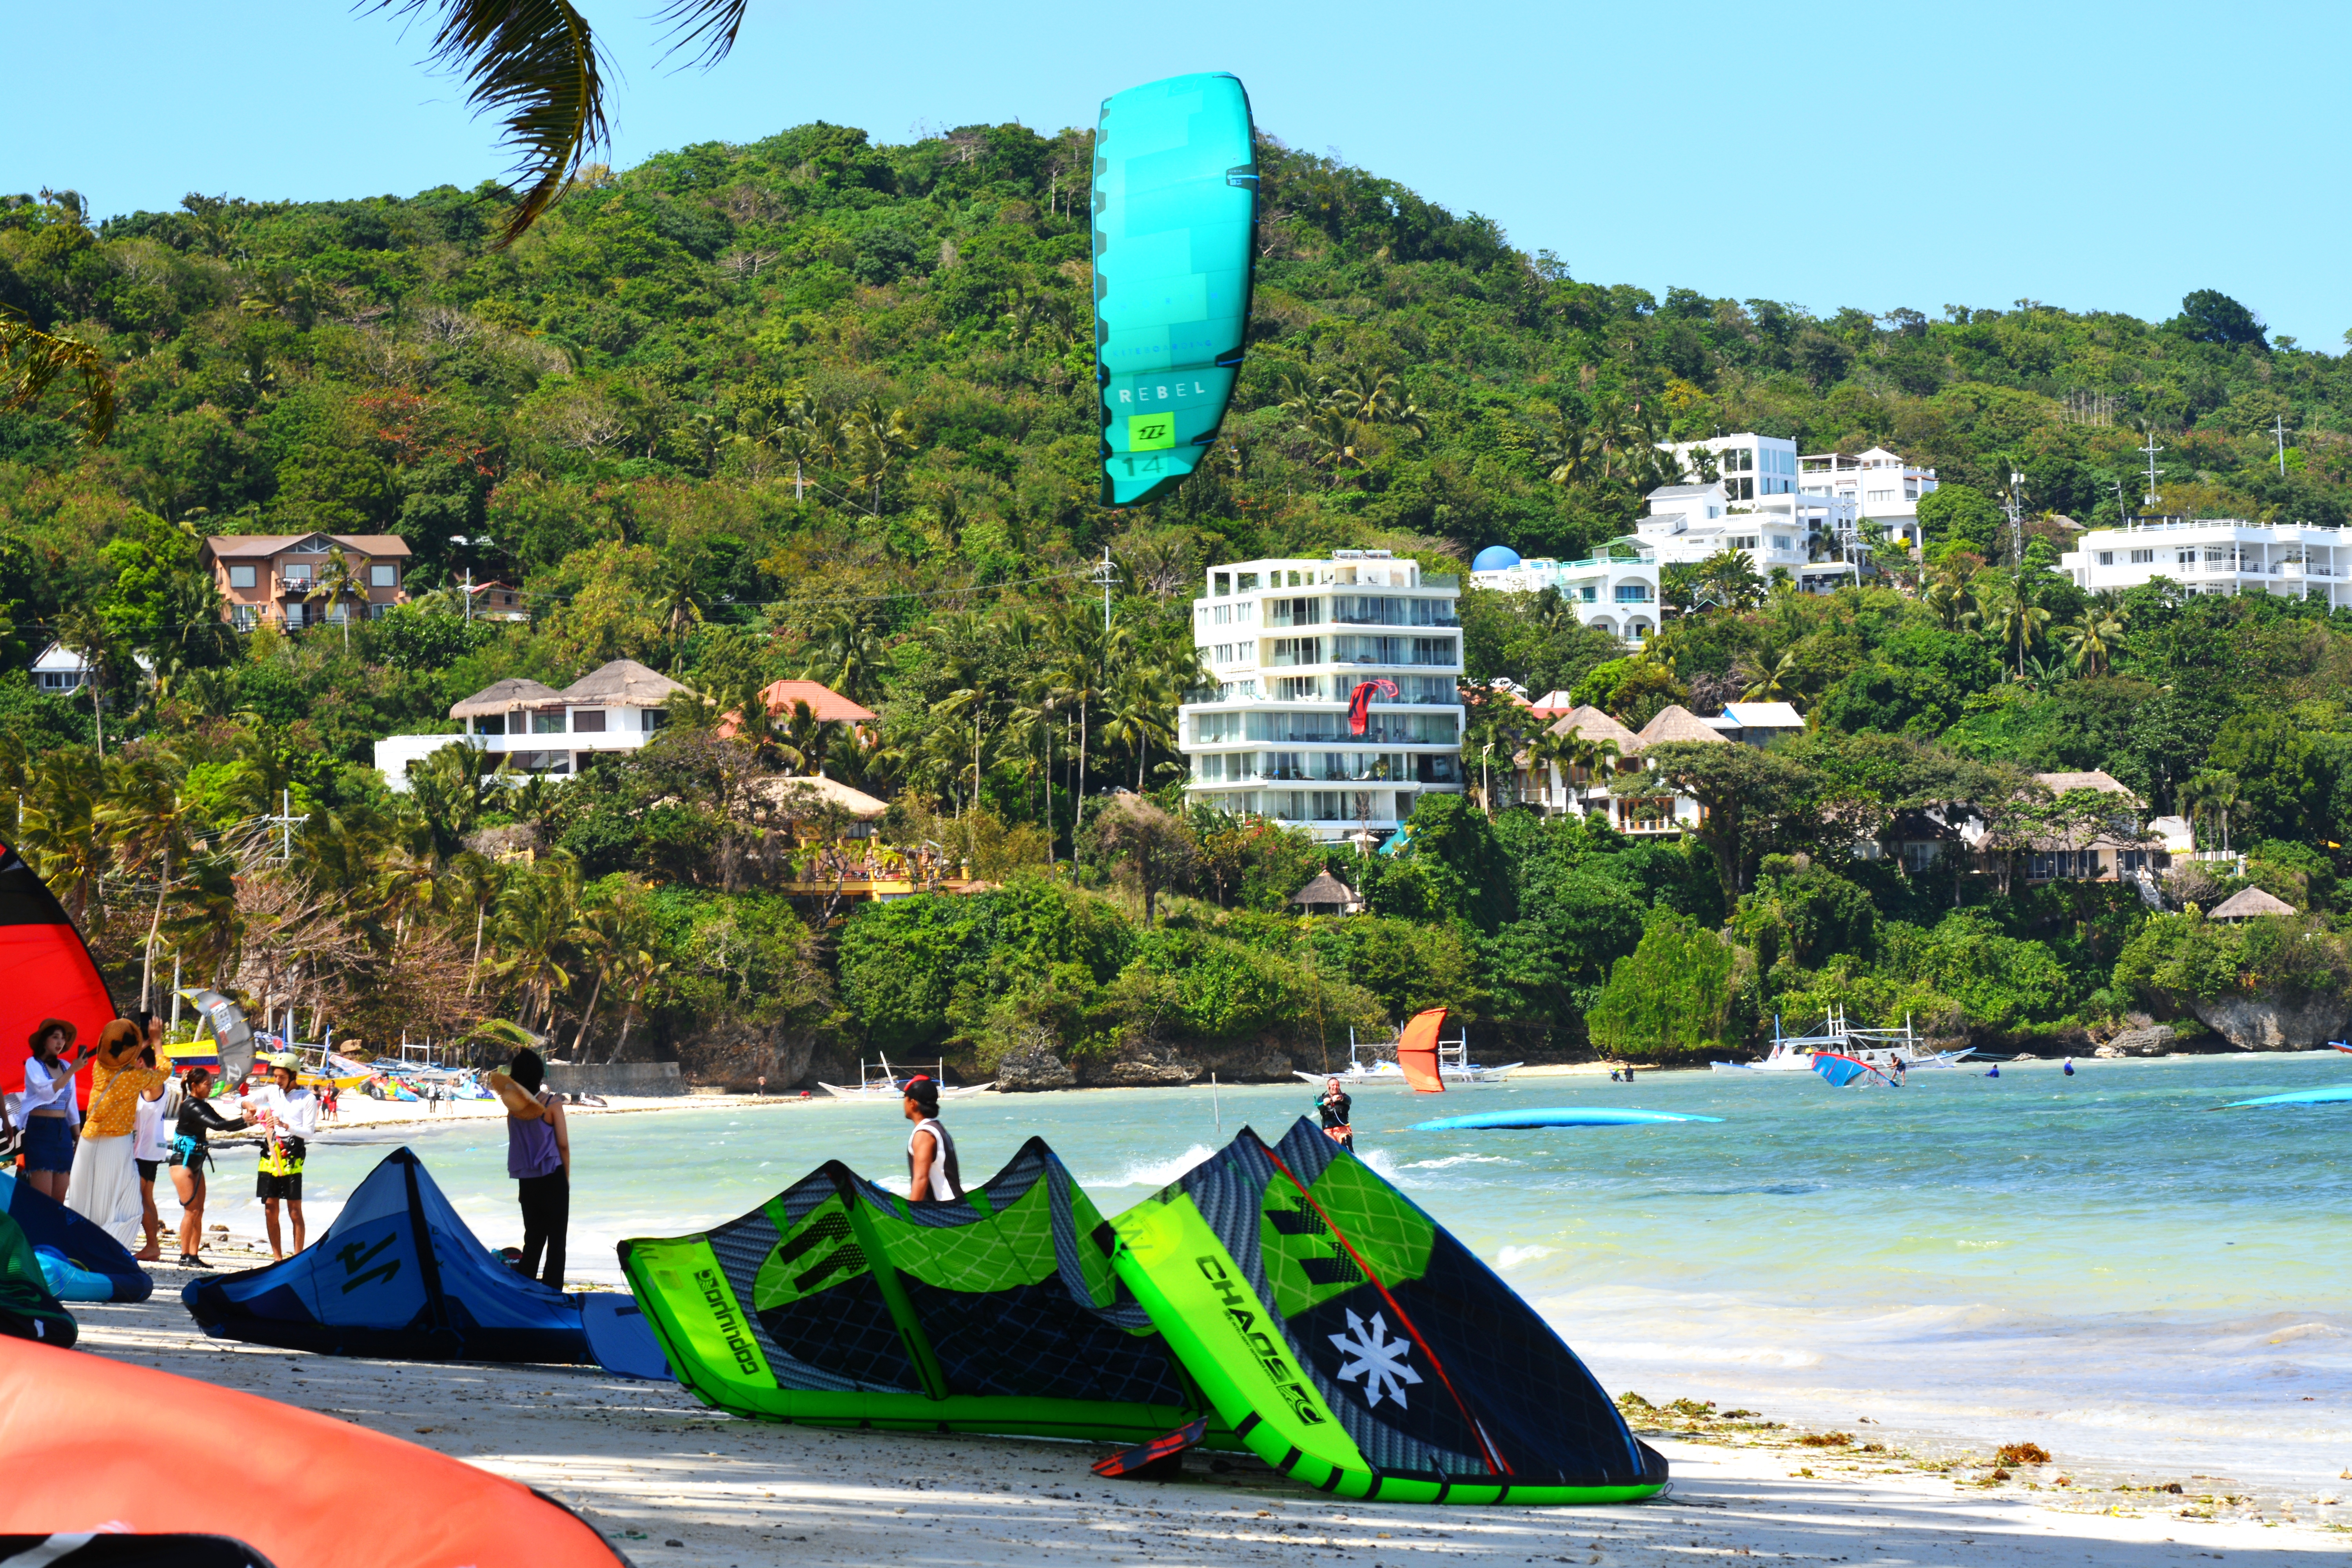 Kite trip to Boracay island 2019 with kiteschool kiteam!